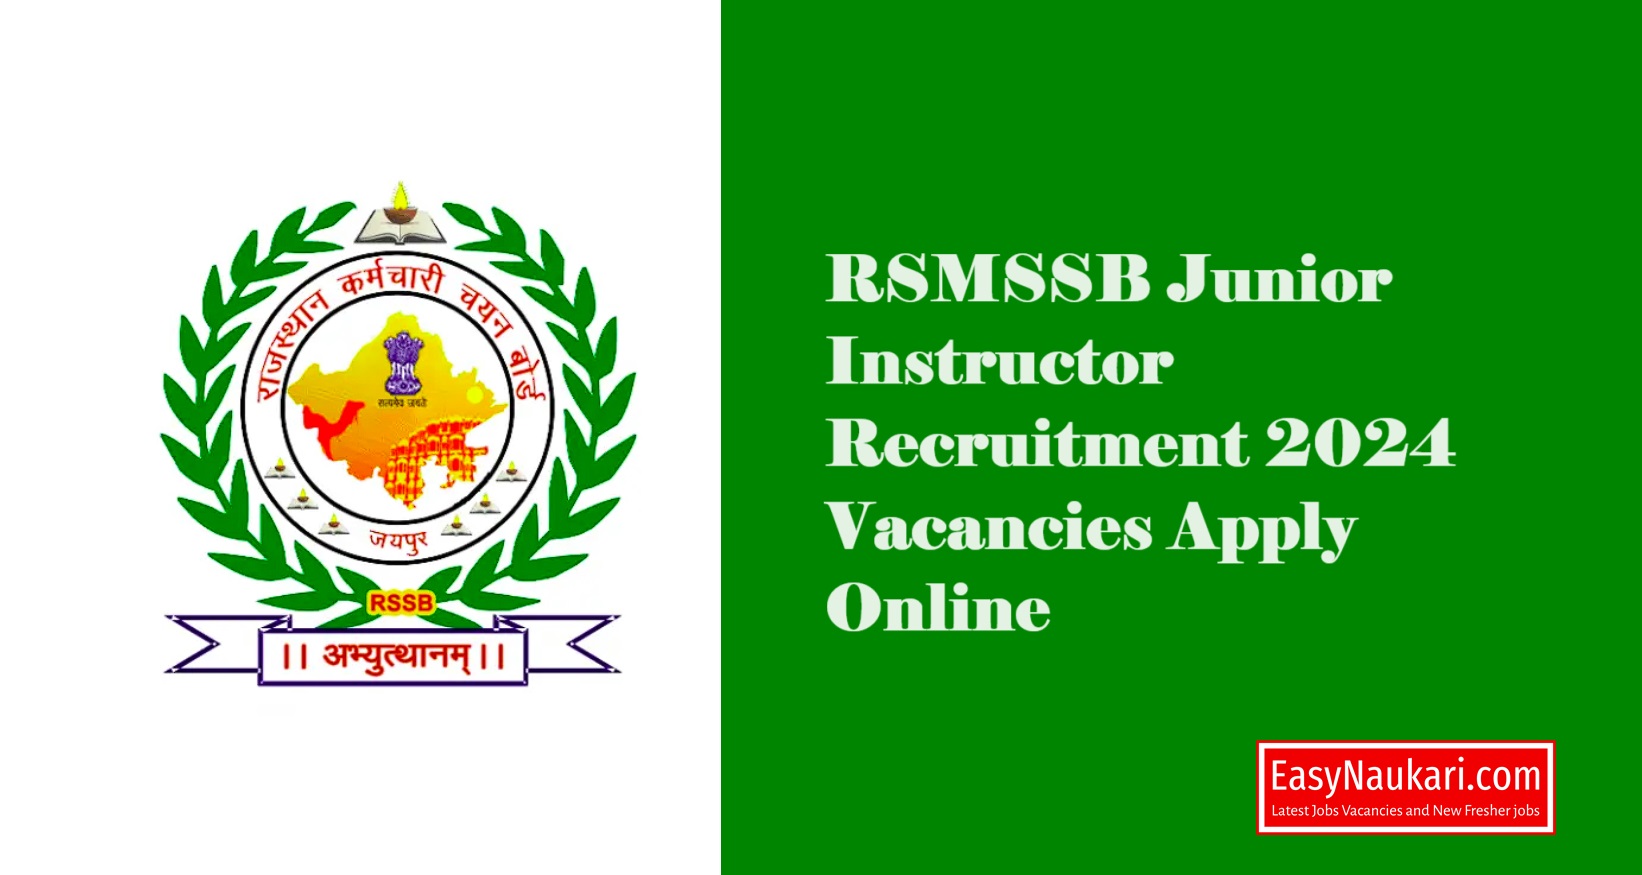 RSMSSB Junior Instructor Recruitment 2024 Vacancies Apply Online